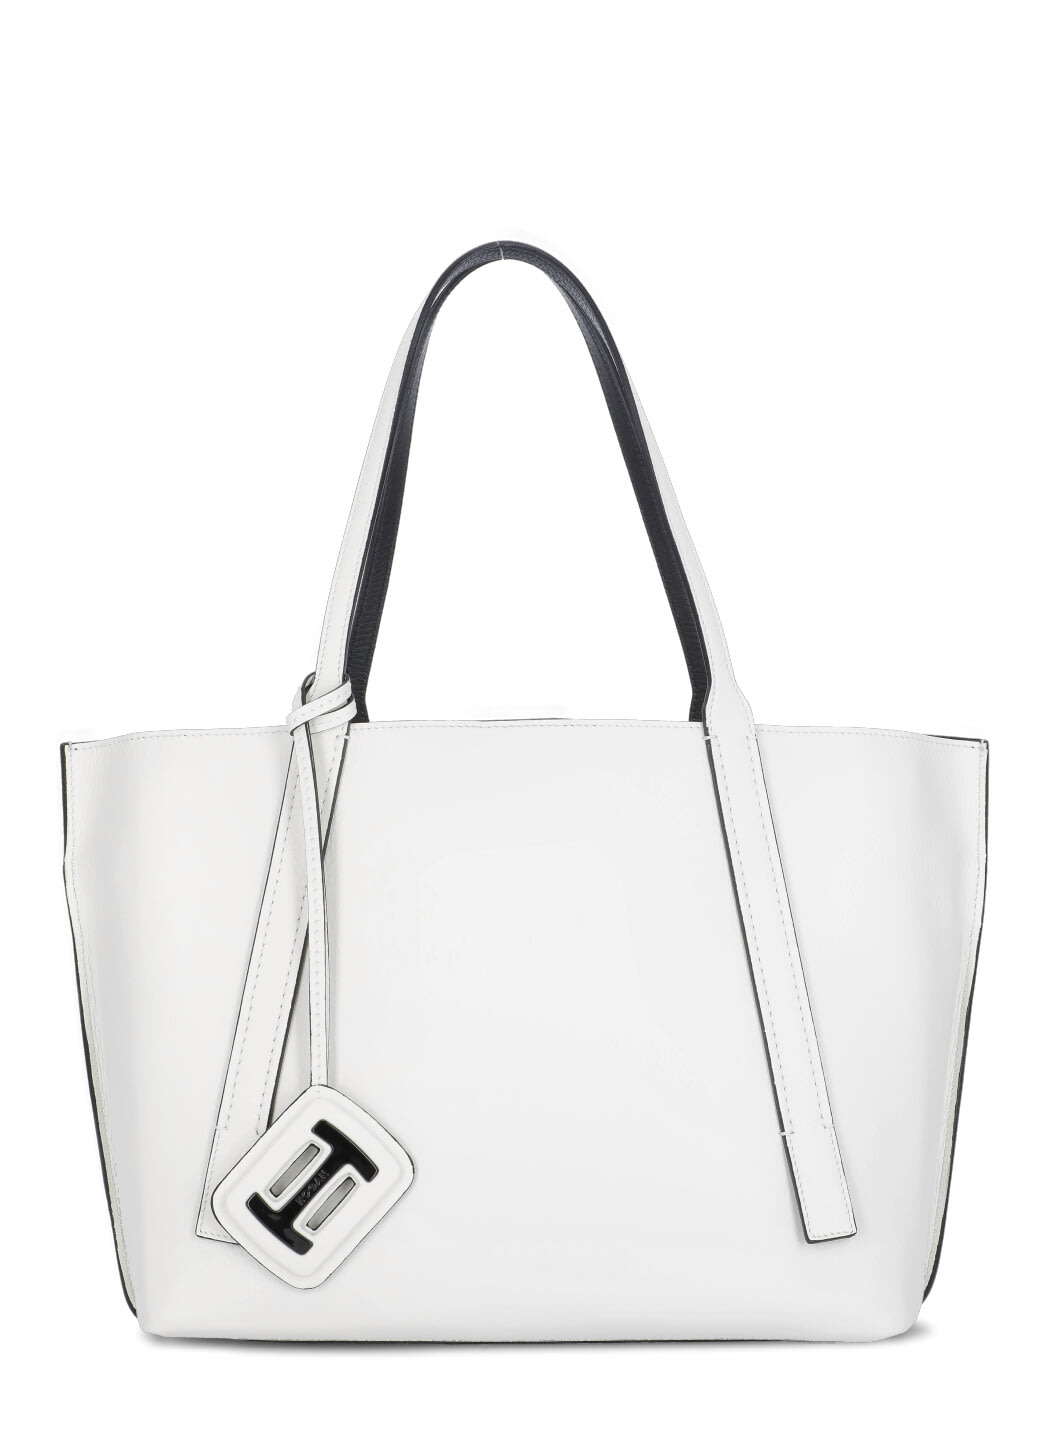 Hogan H-bag Shopping Bag